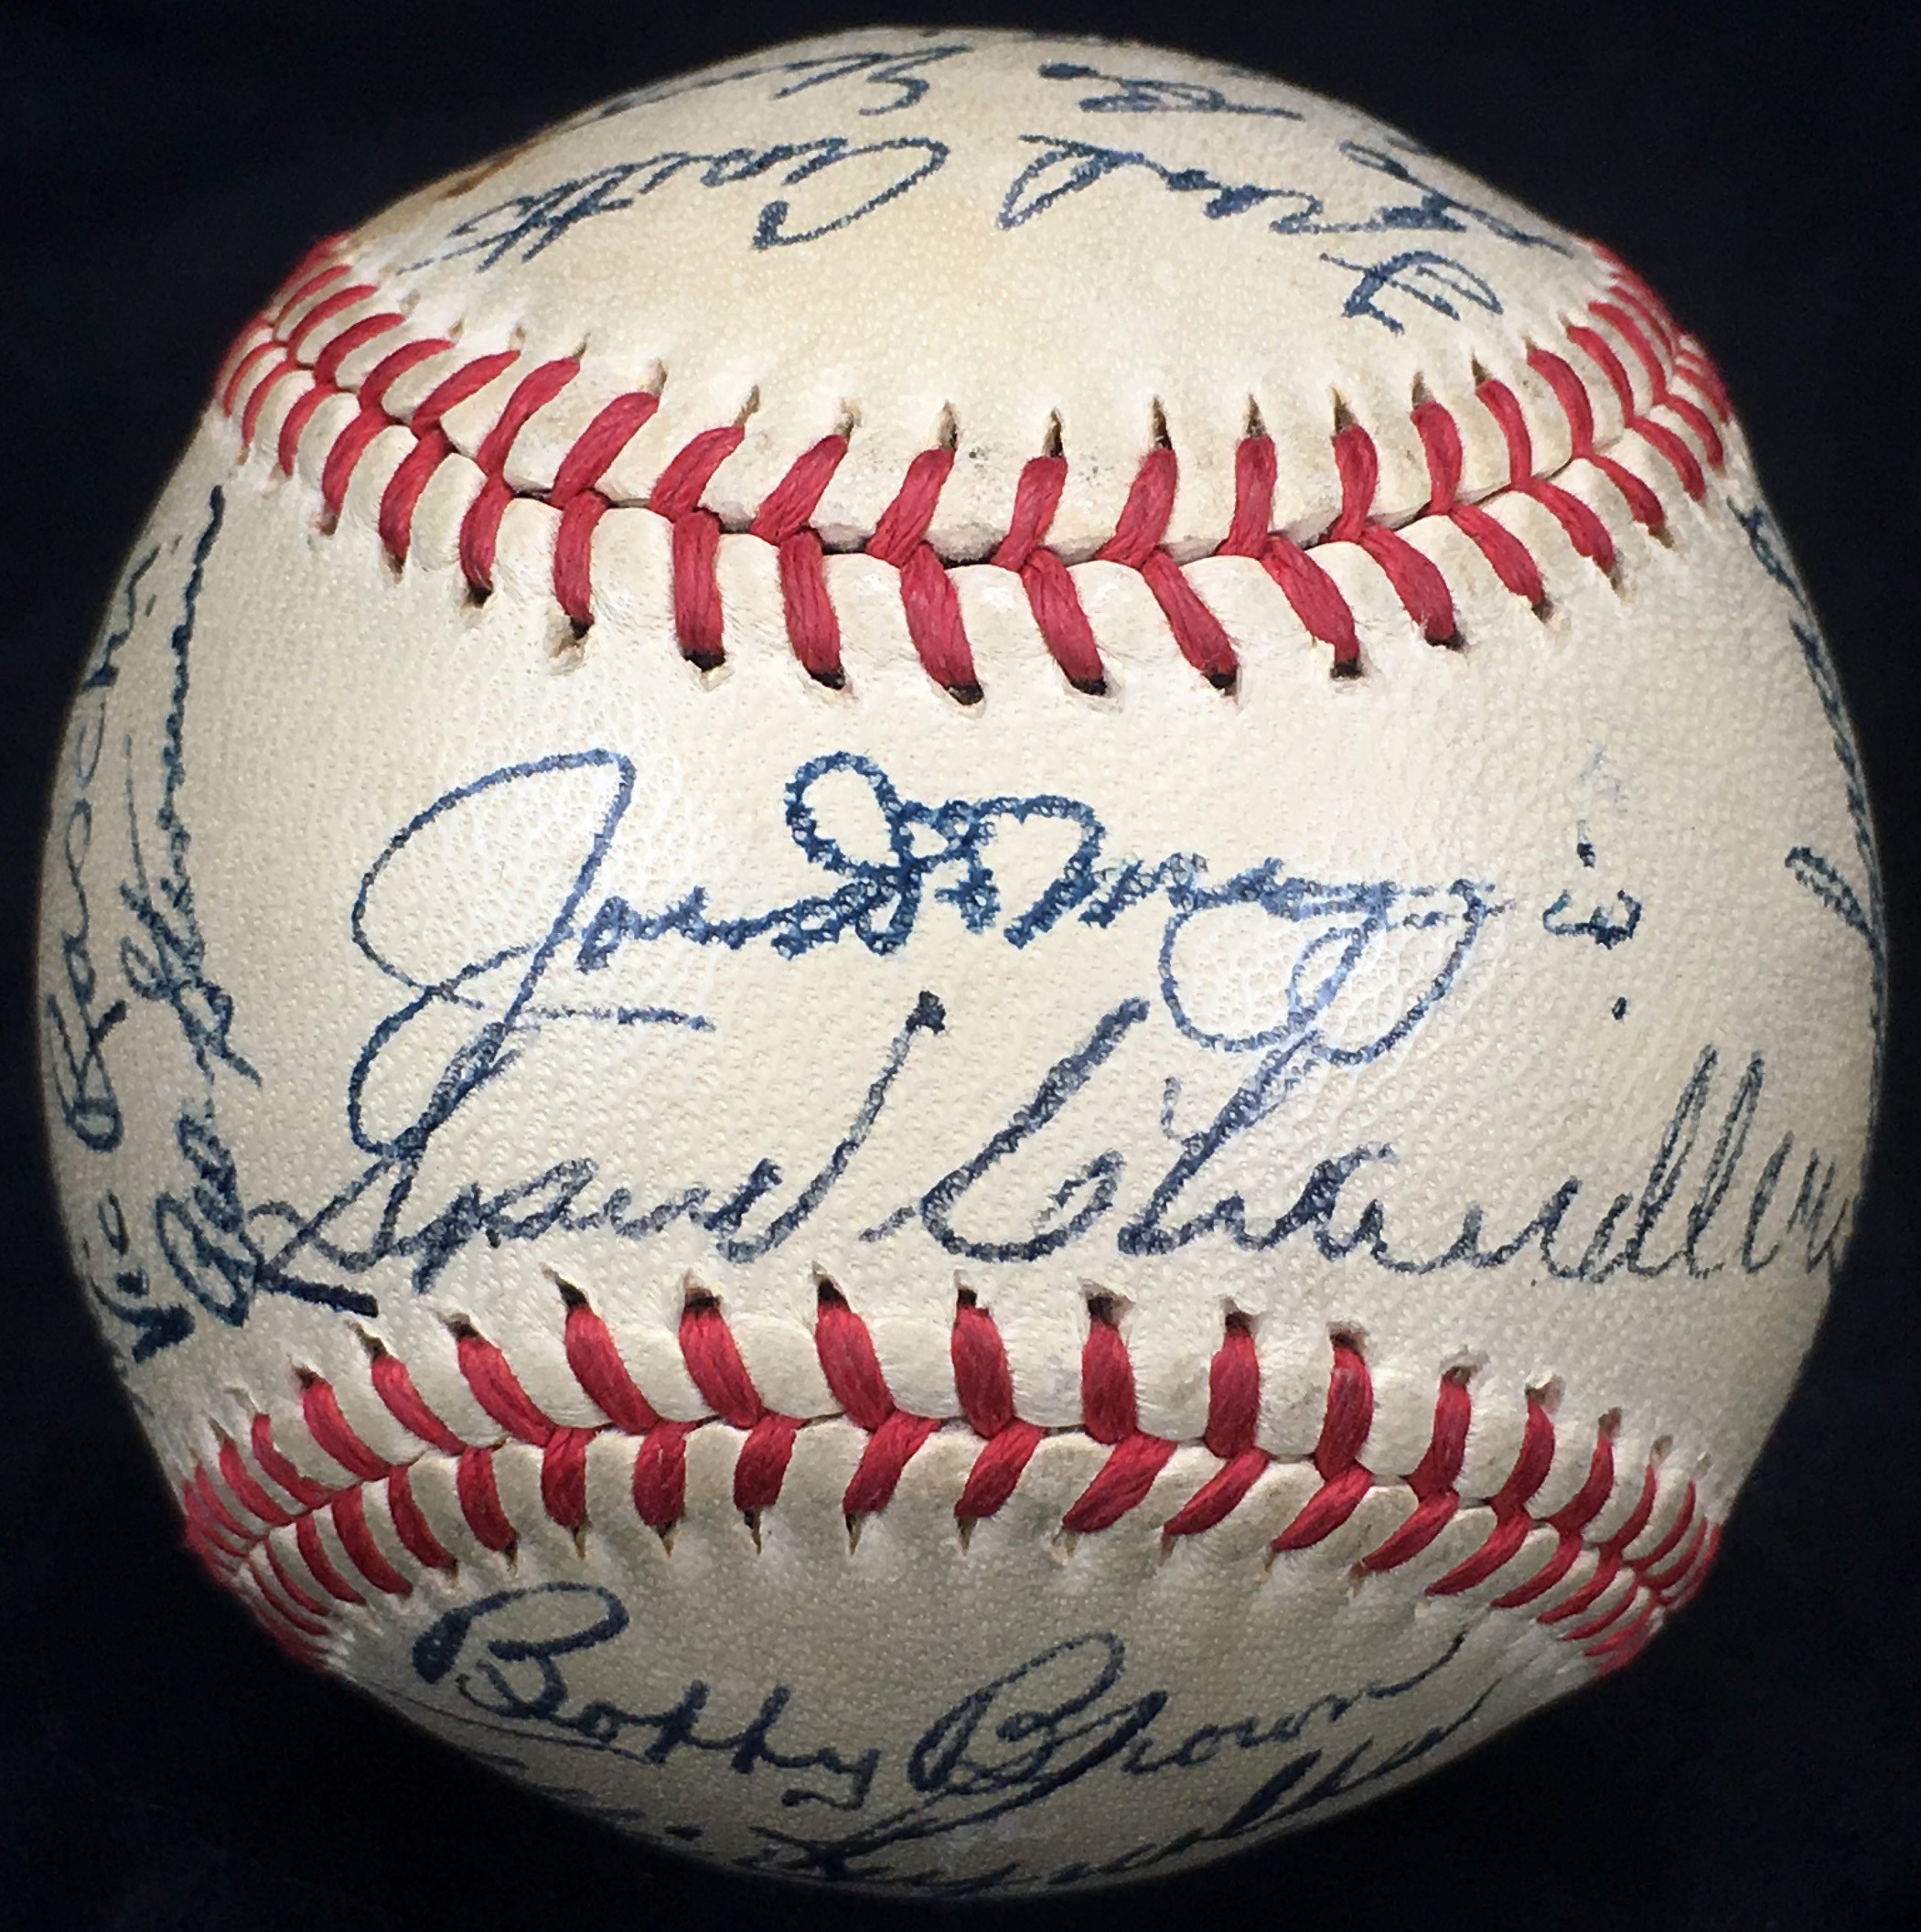 - Exquisite 1947 World Champion Yankees Team-Signed Baseball (PSA)